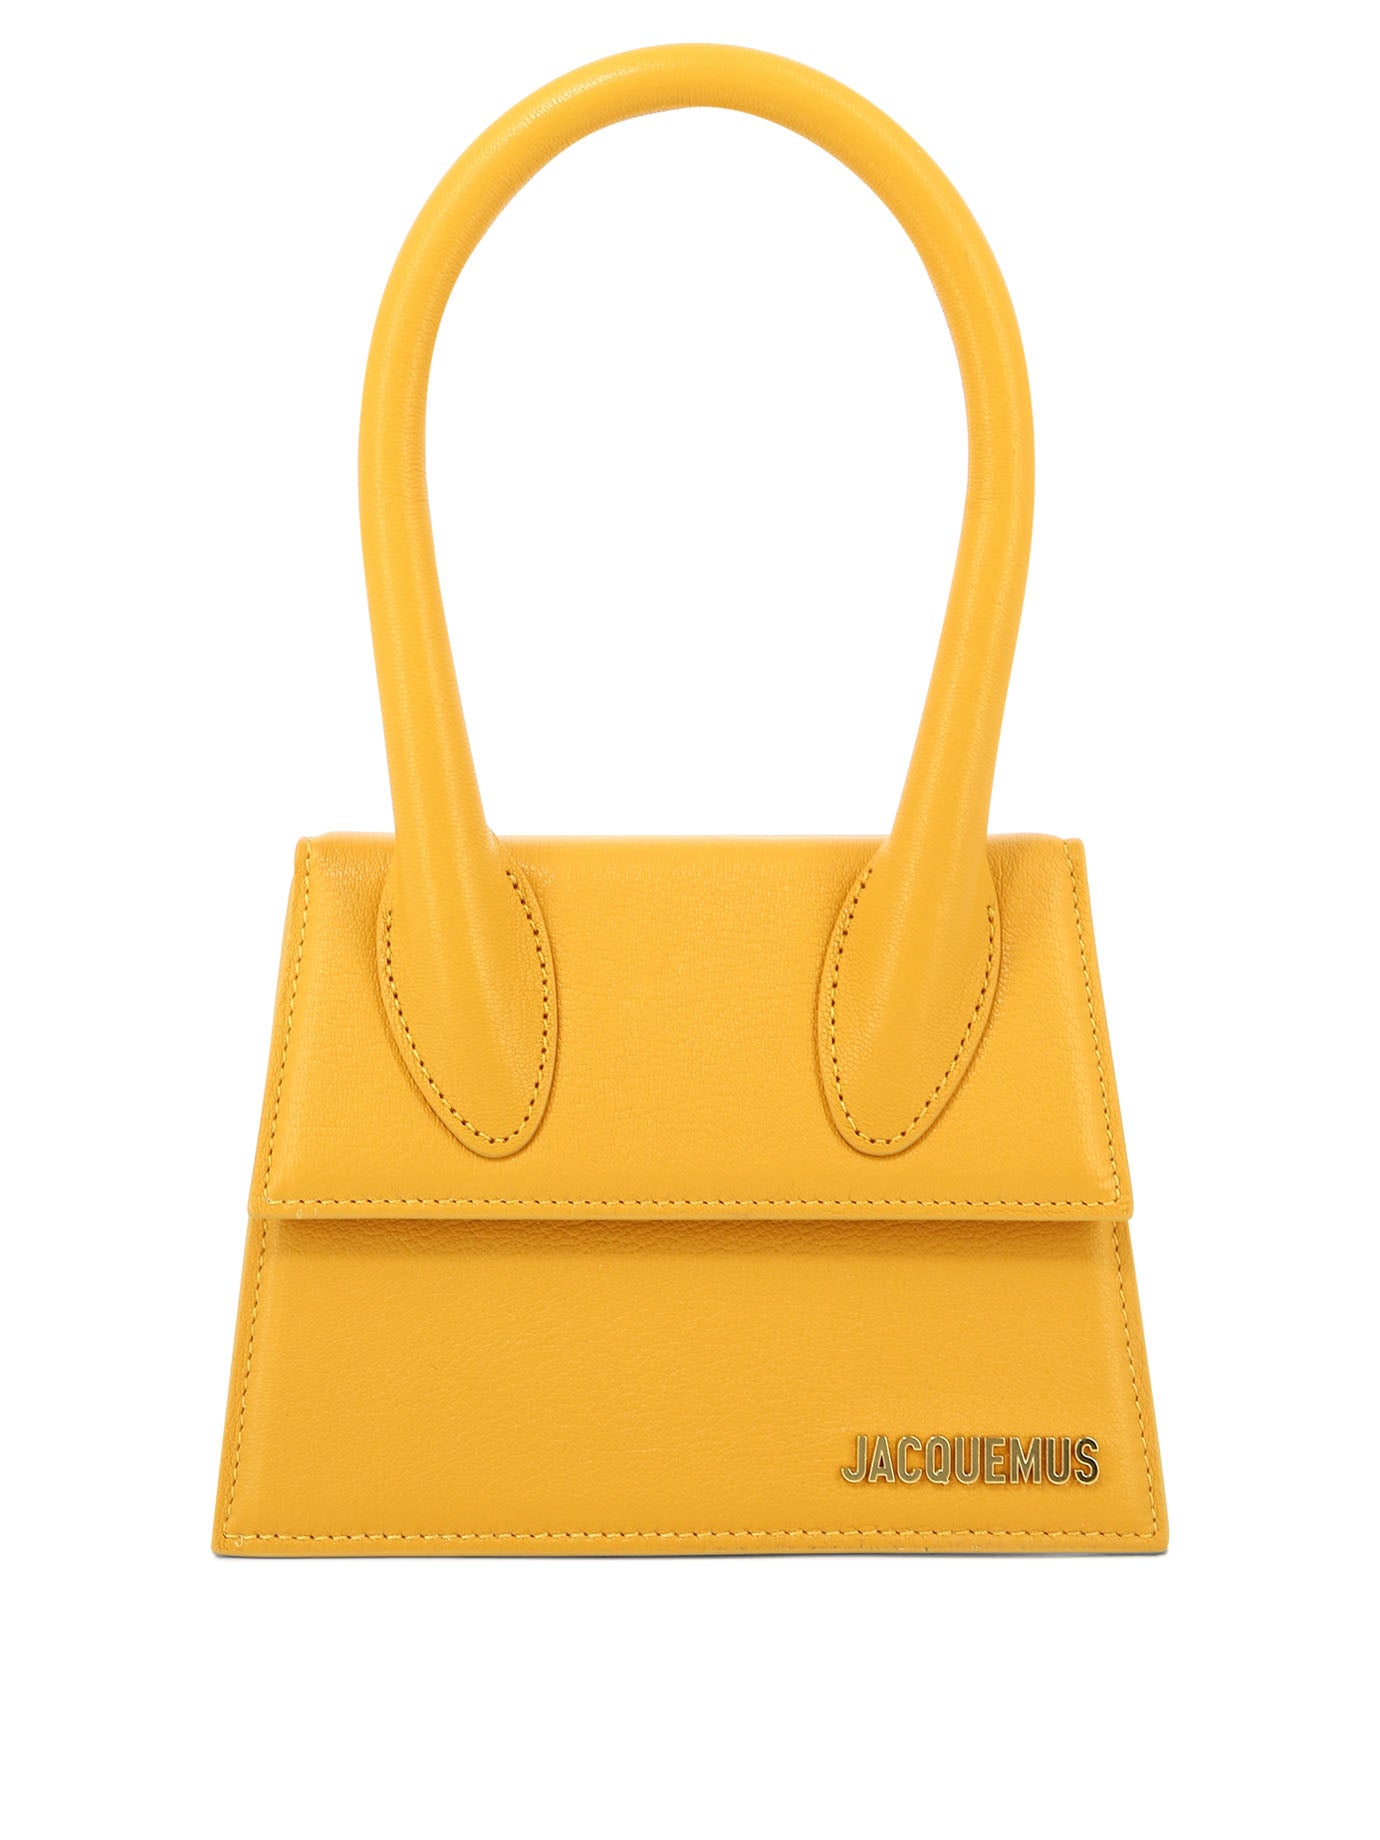 Jacquemus Stylish Orange Leather Top-handle Handbag For Women